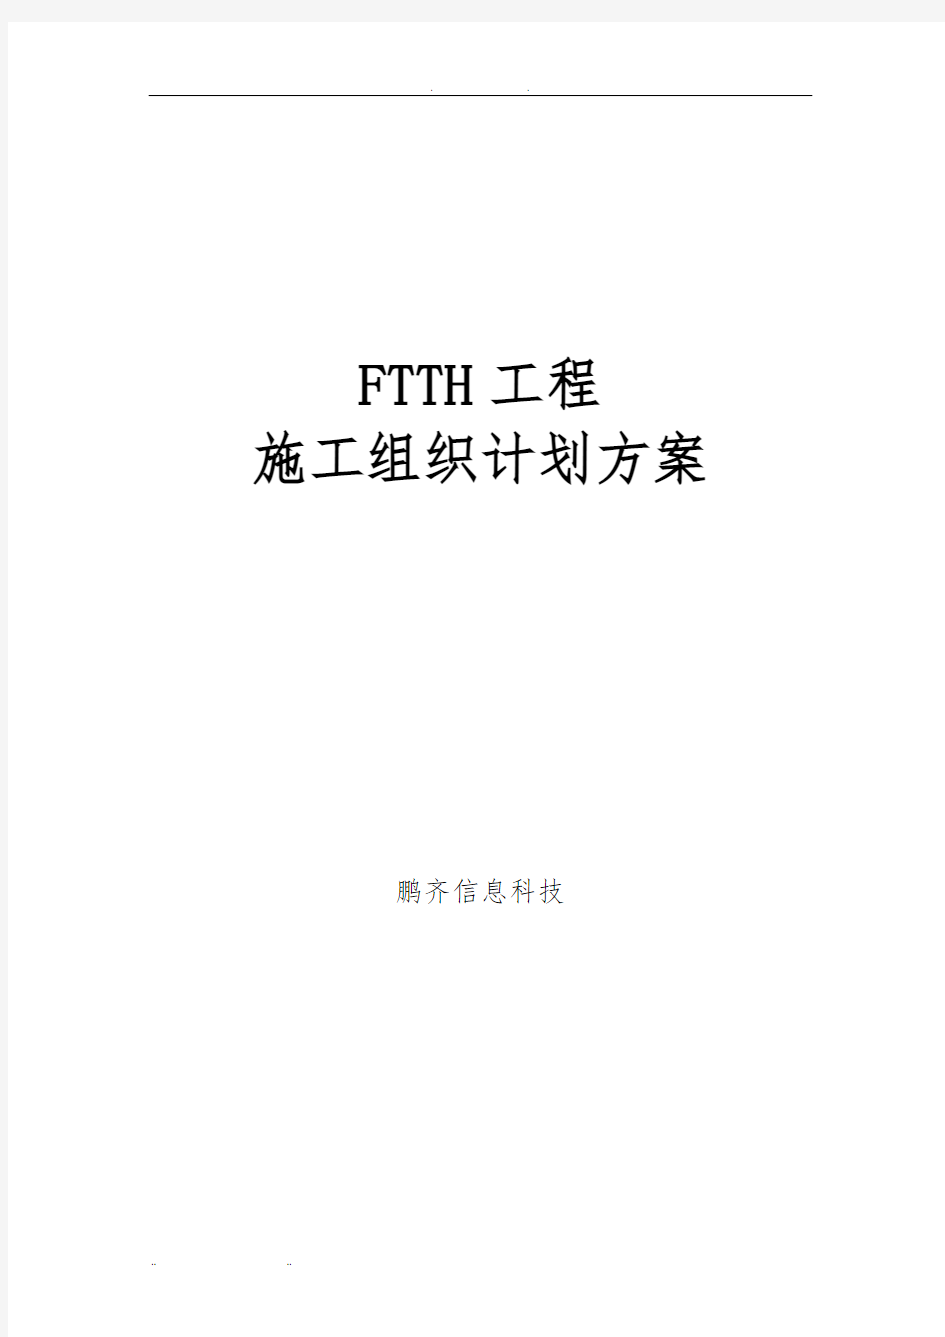 FTTH(光缆入户)工程施工组织设计方案